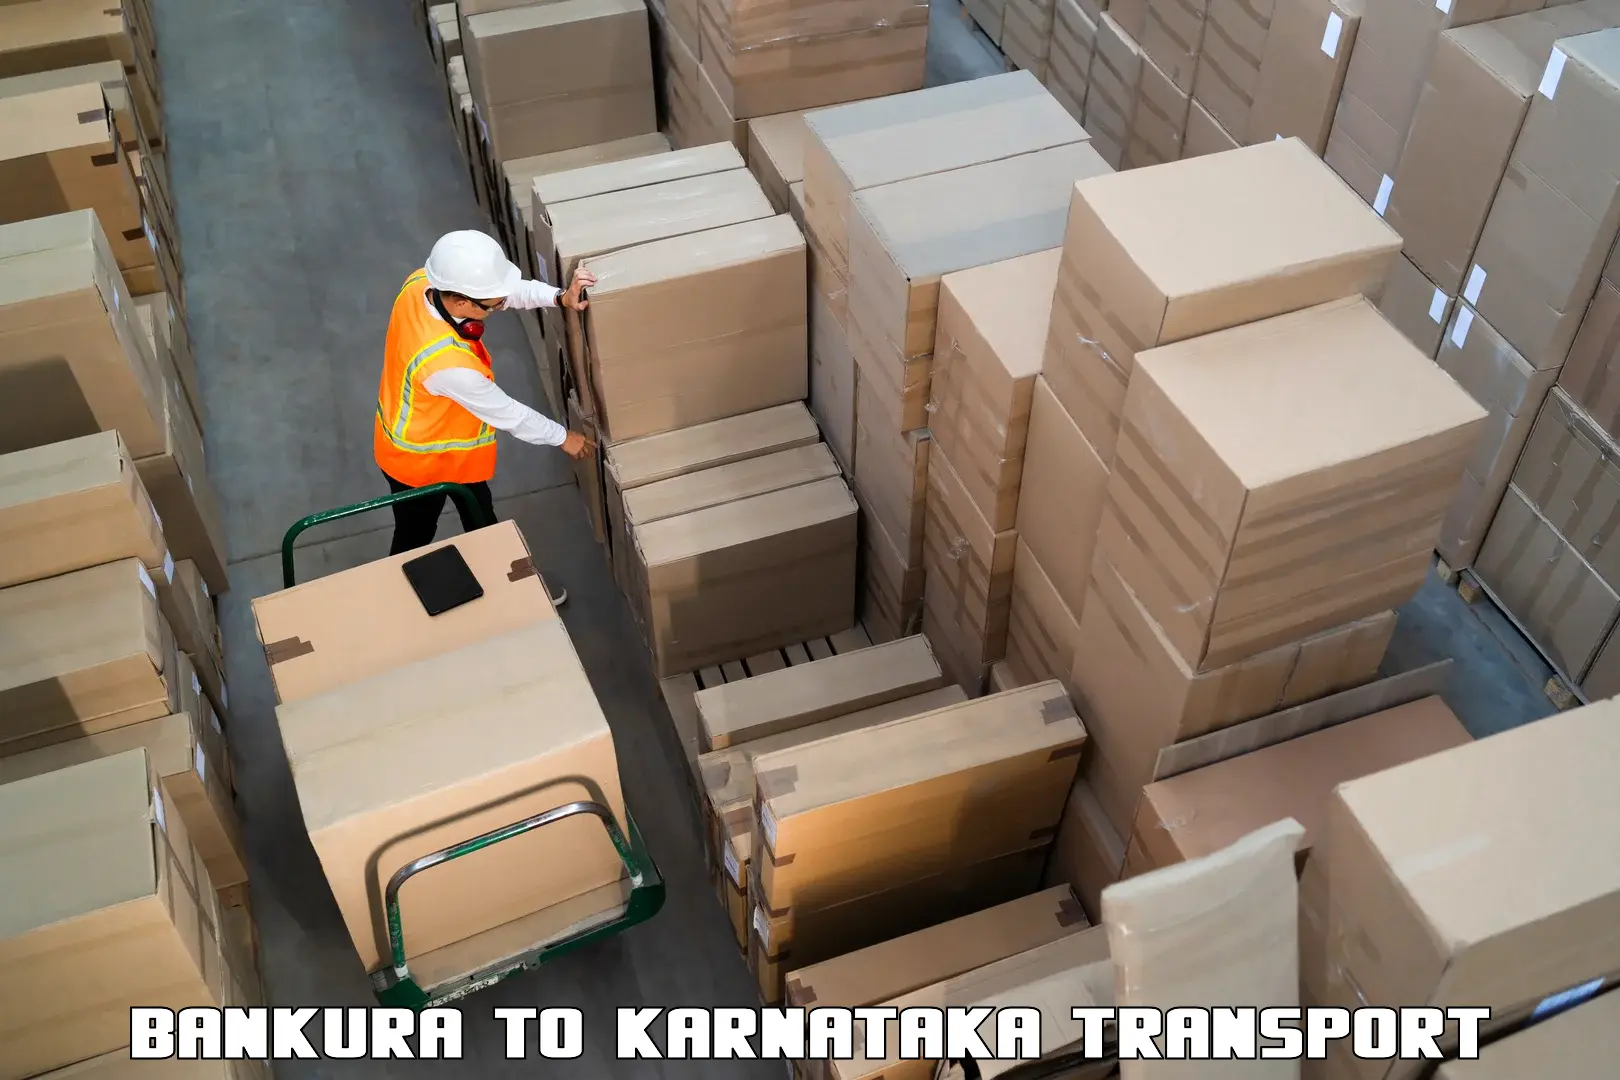 Nearby transport service Bankura to Karnataka